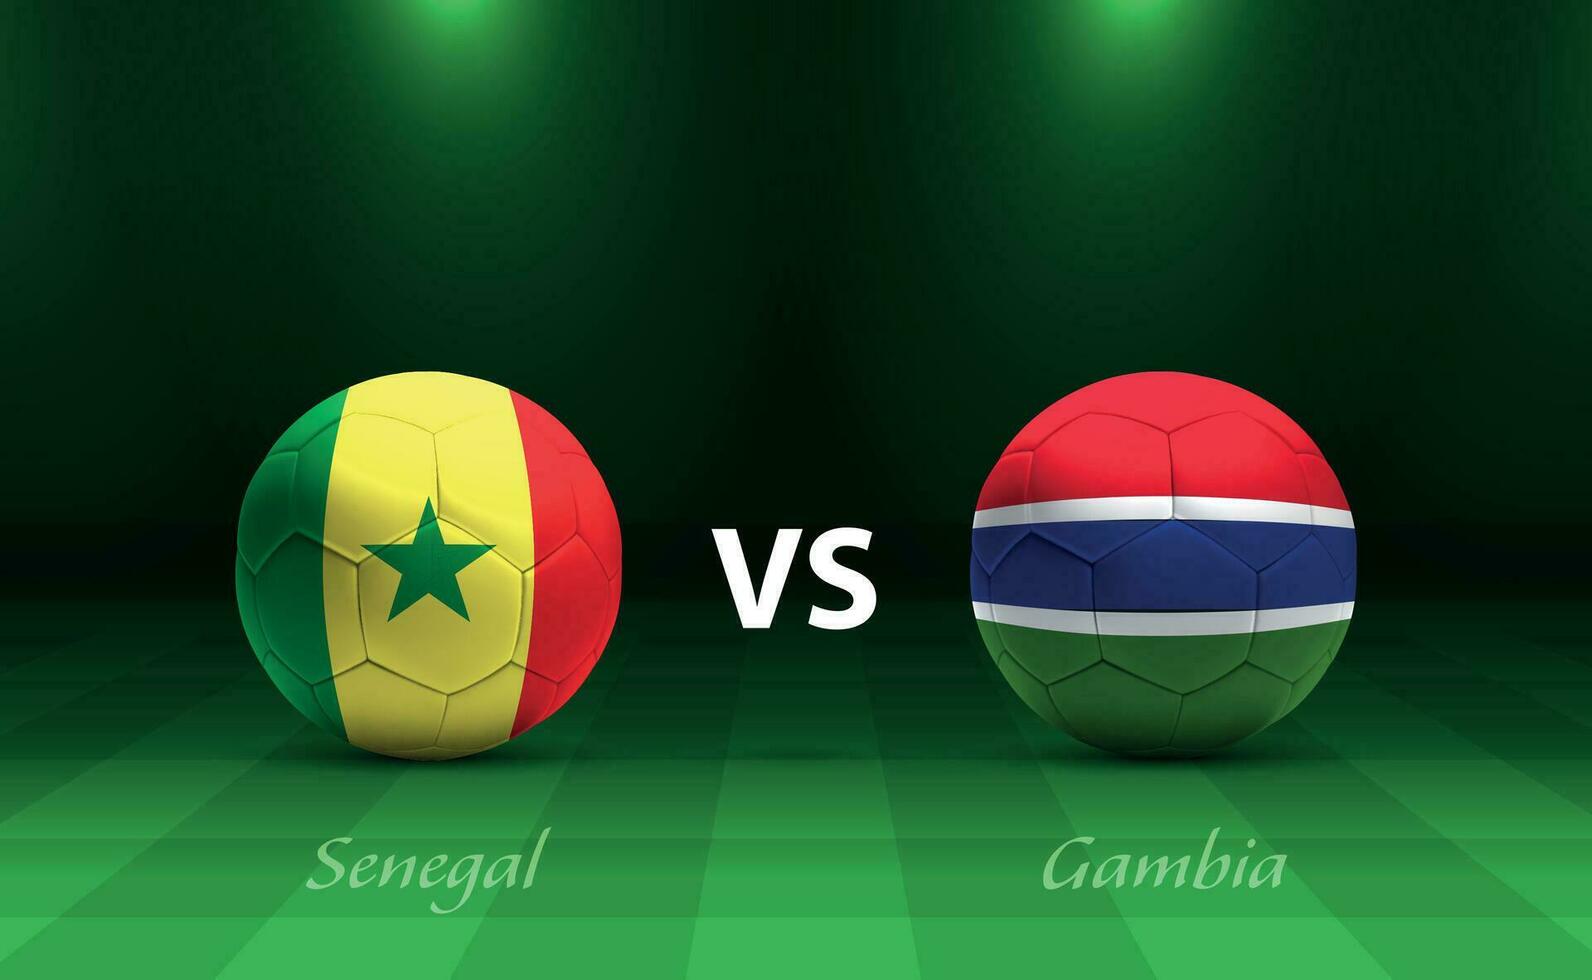 Senegal vs Gambia football scoreboard broadcast template vector